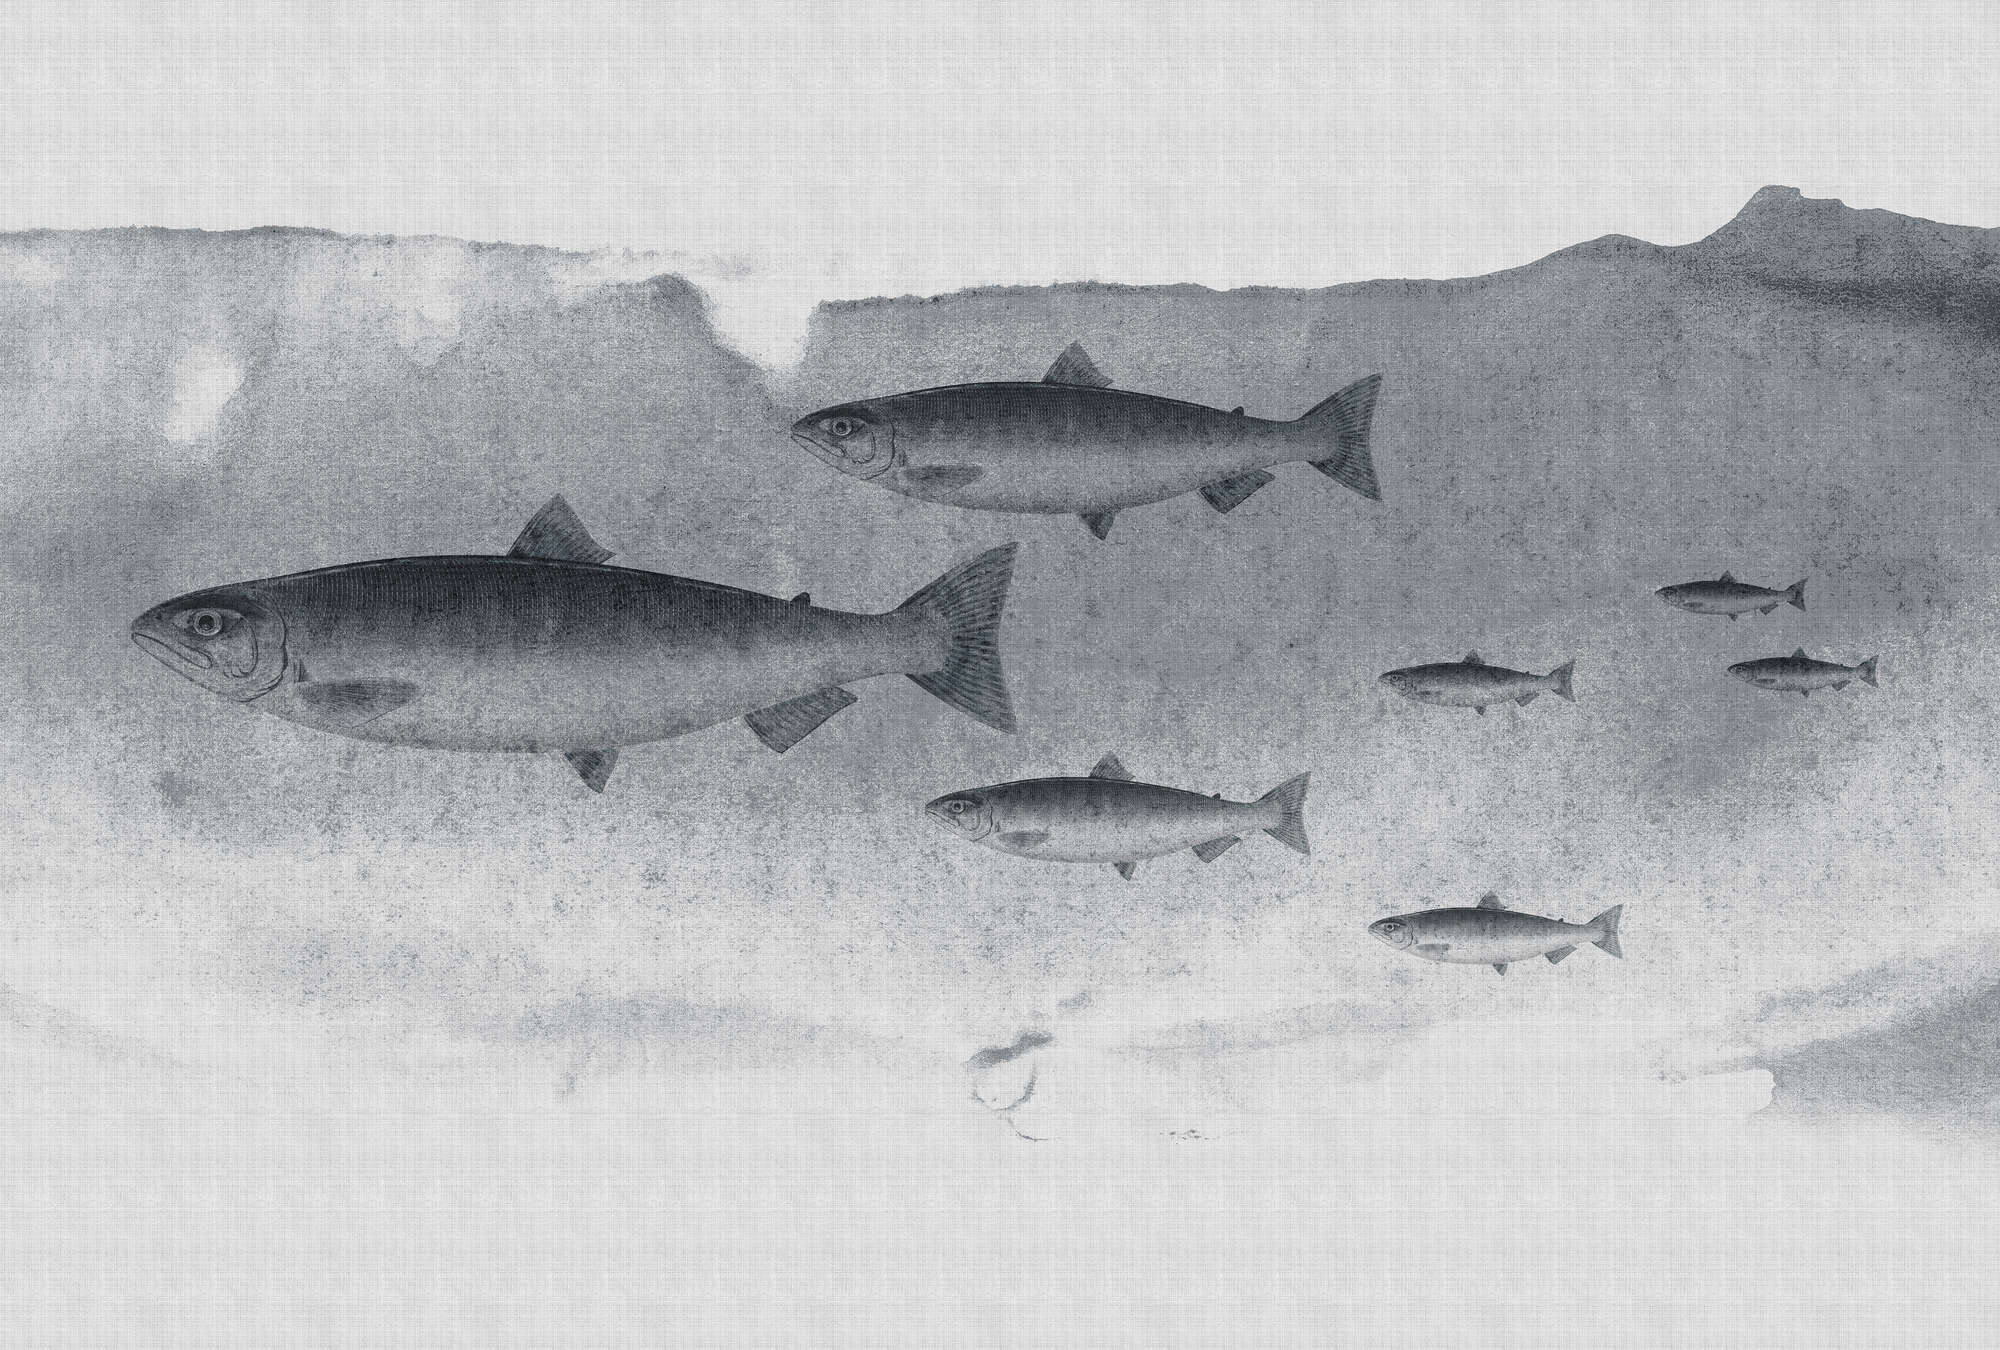             Into the blue 3 - Fish watercolour in grey as a photo wallpaper in natural linen structure - Grey | Matt smooth non-woven
        